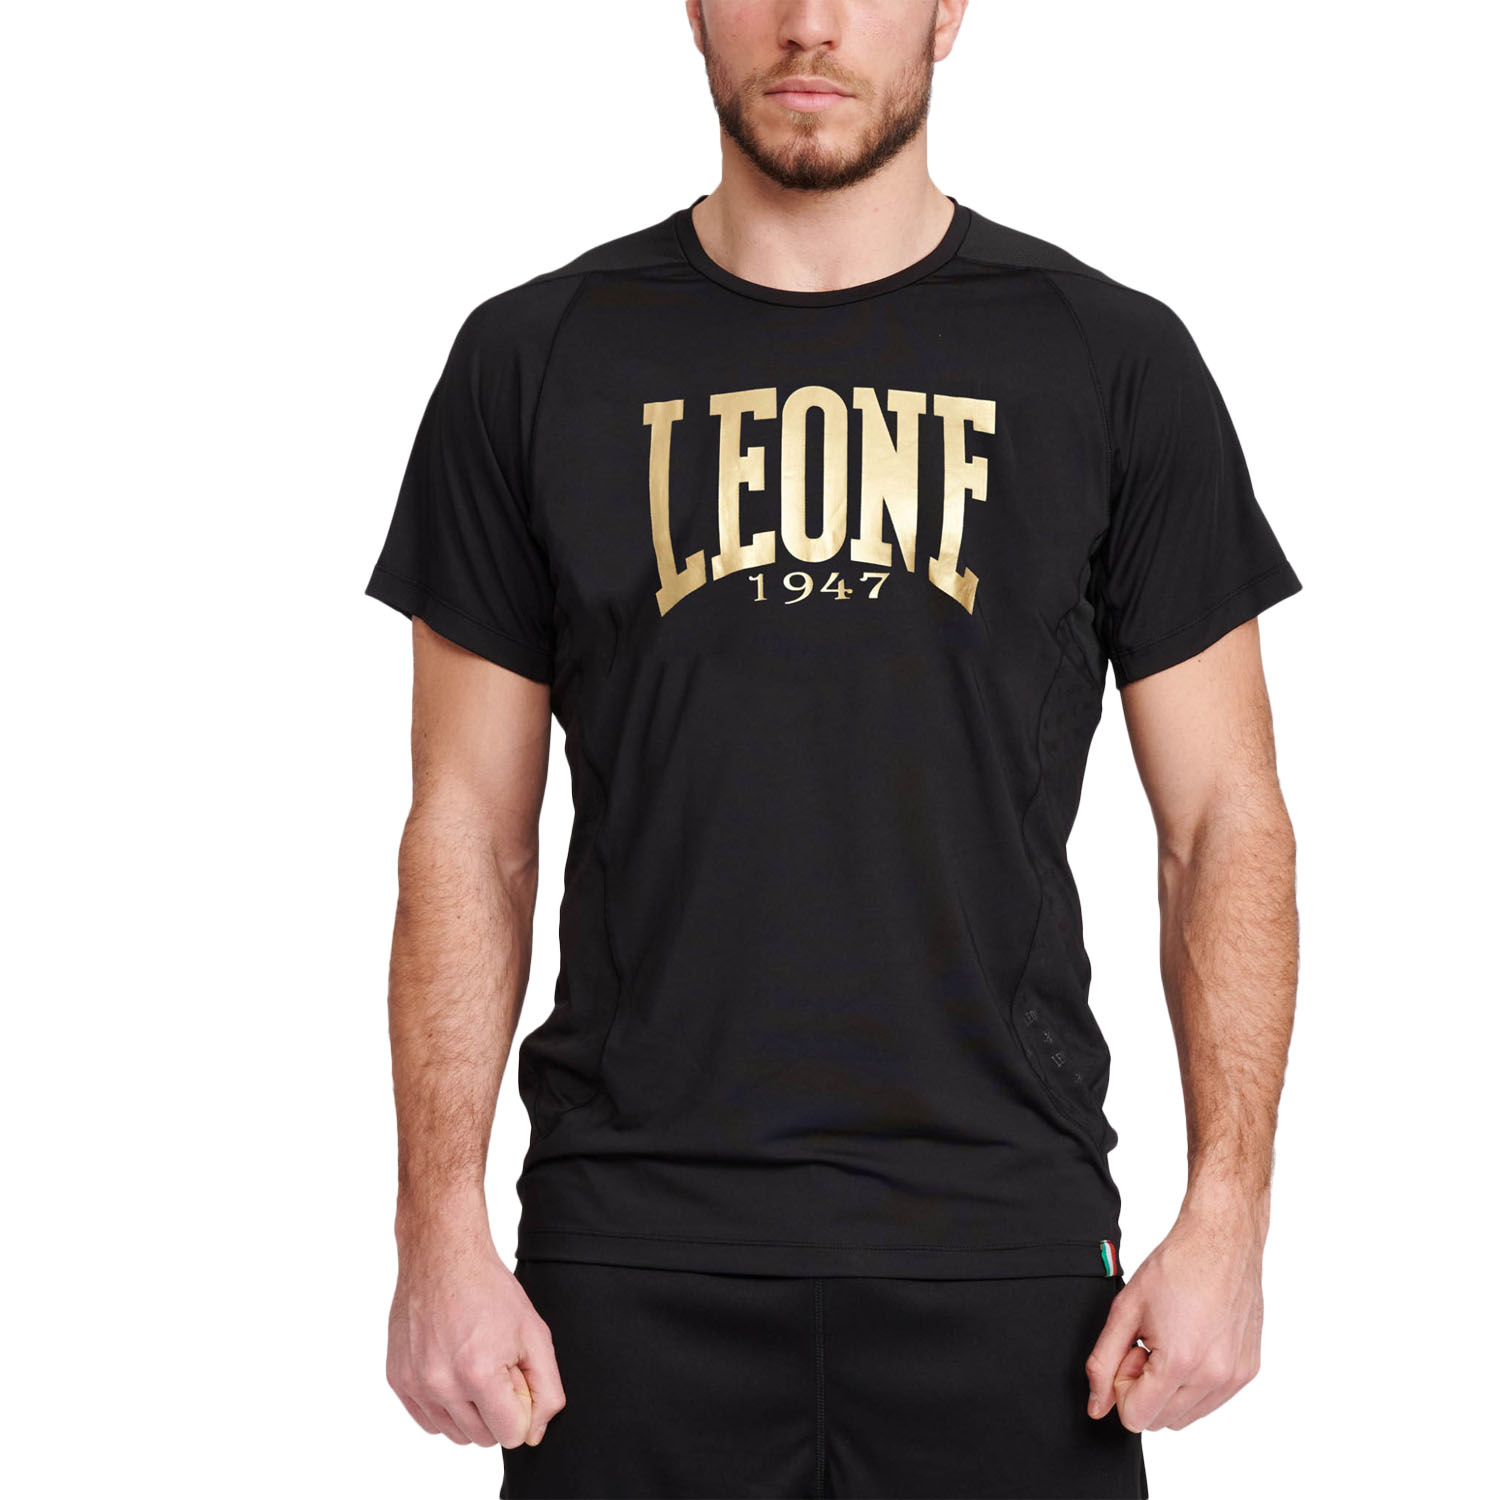 LEONE Fitness T-Shirt, DNA, ABX706, schwarz-gold